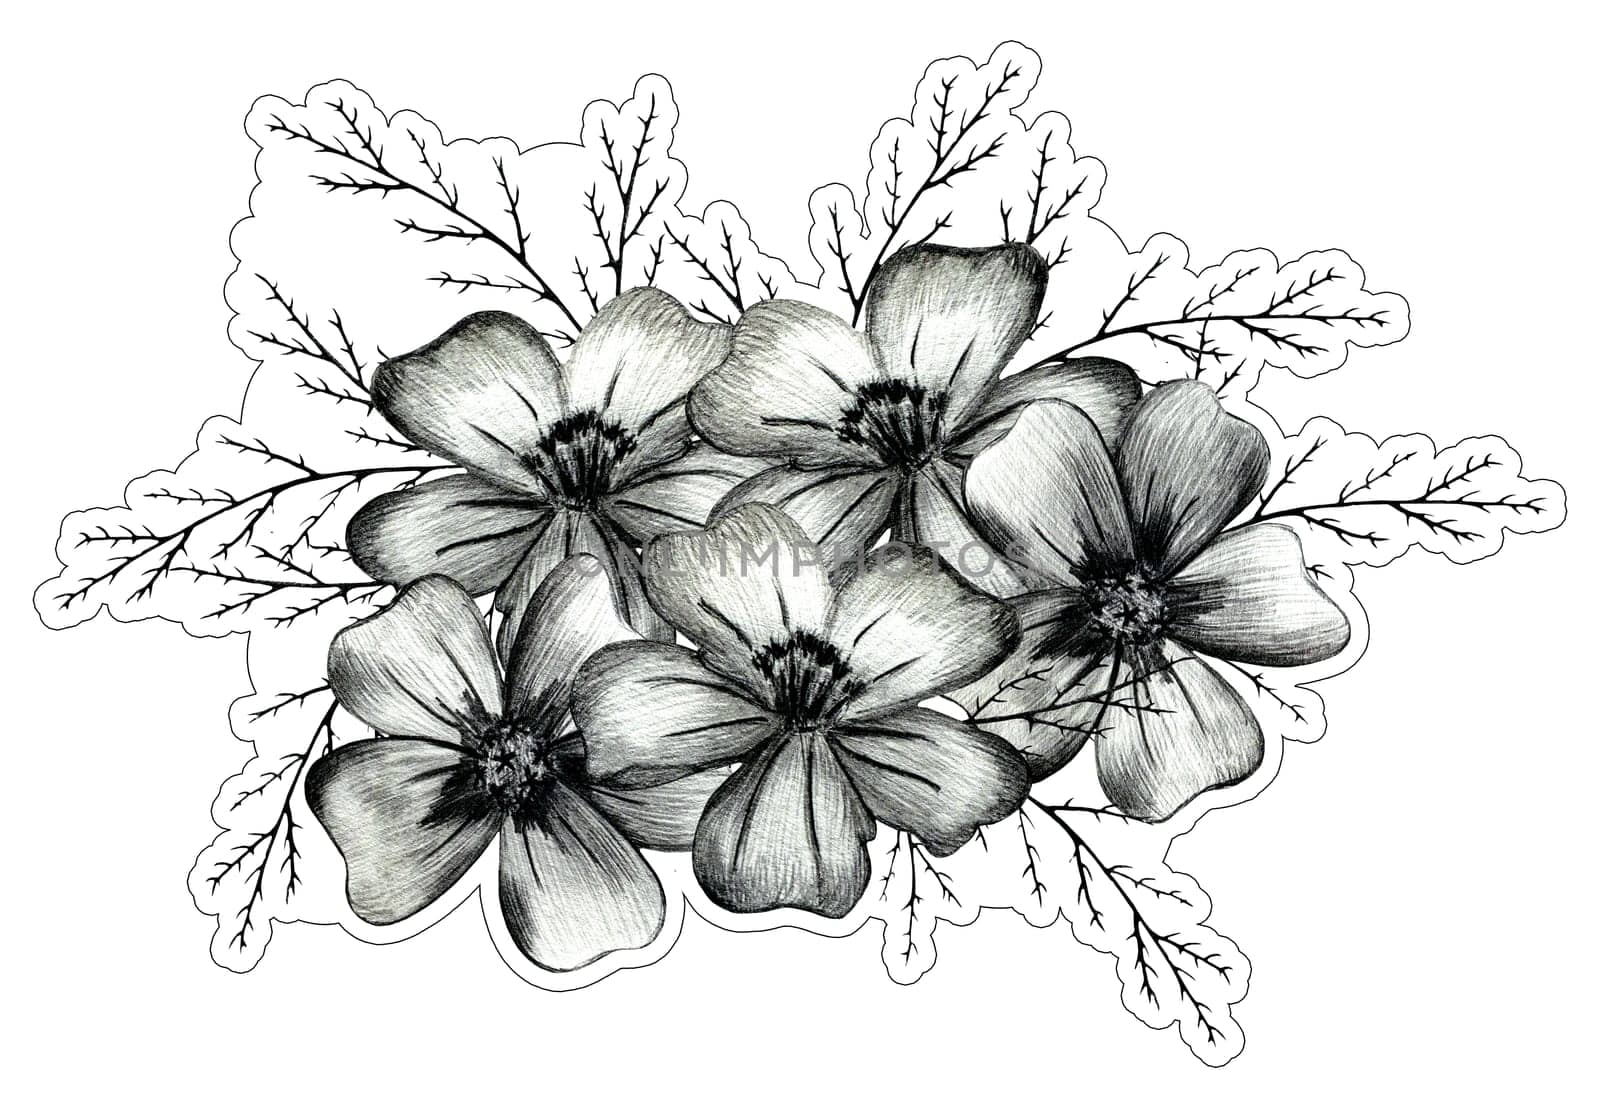 Black and White Hand Drawn Marigold Flower Composition. by Rina_Dozornaya